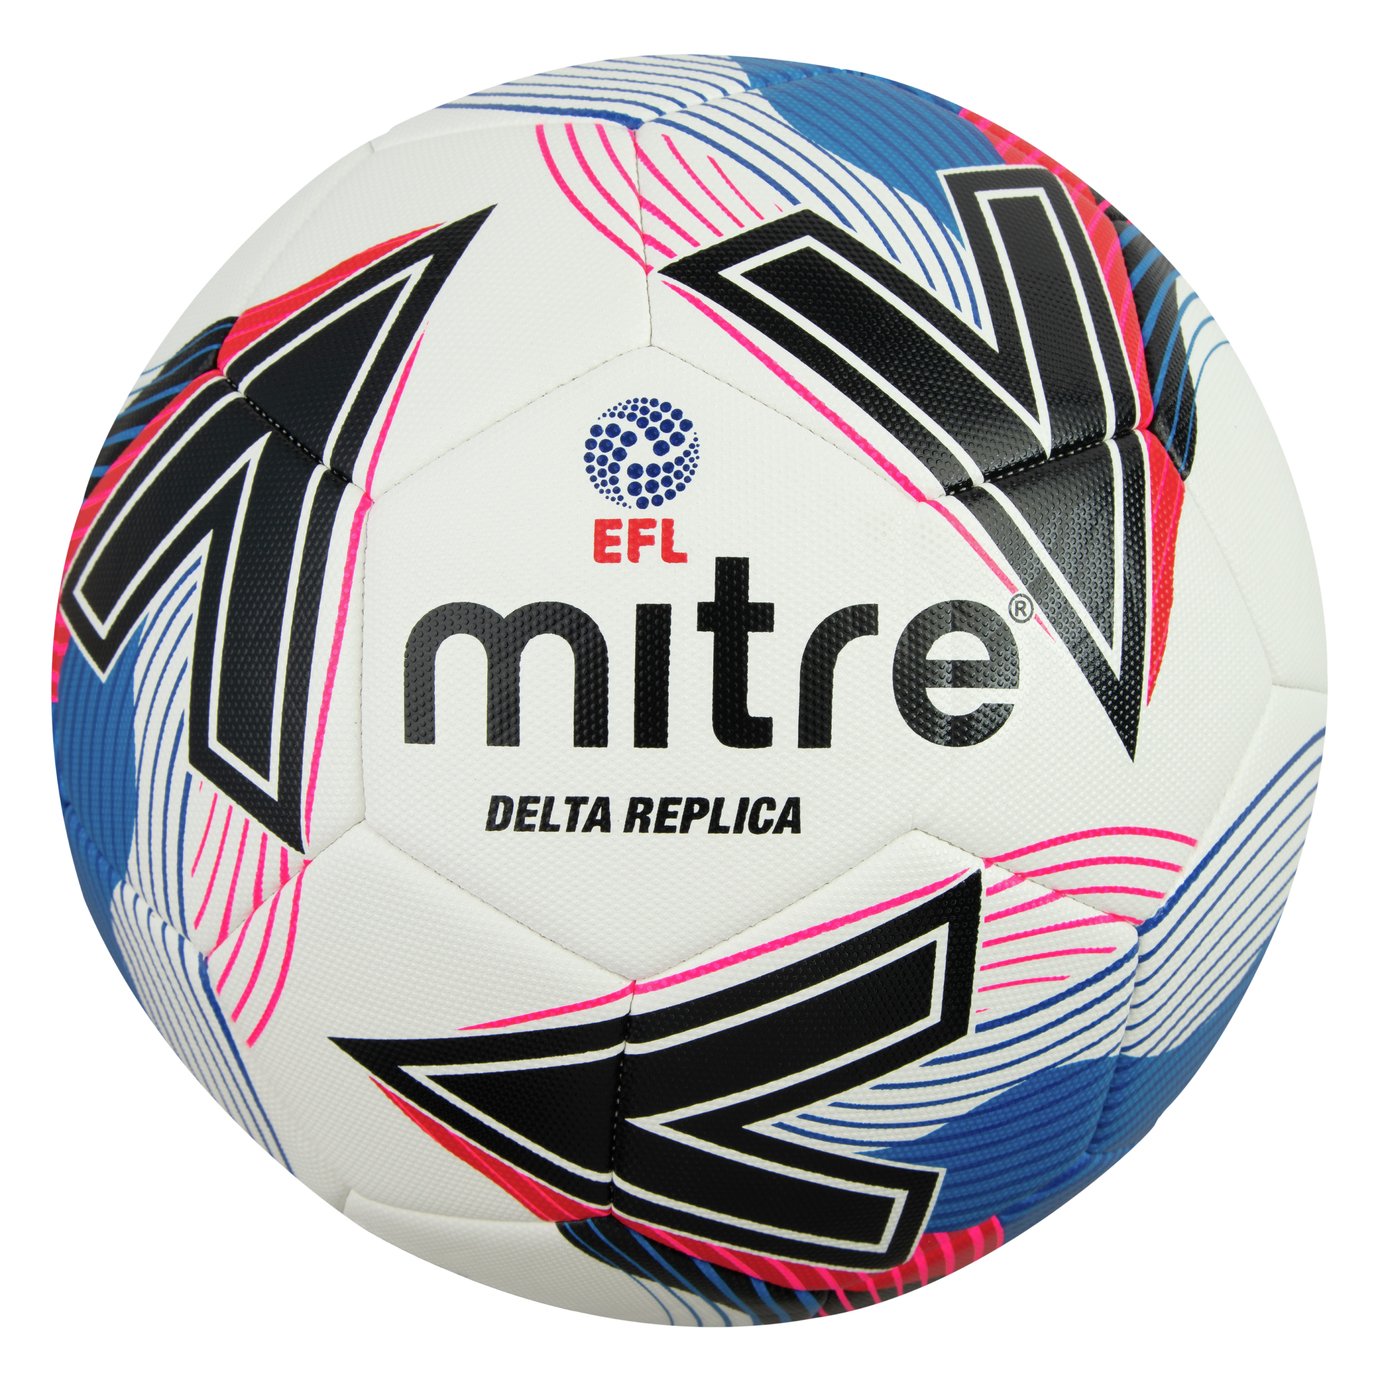 Mitre Efl Soccerball Size 5 